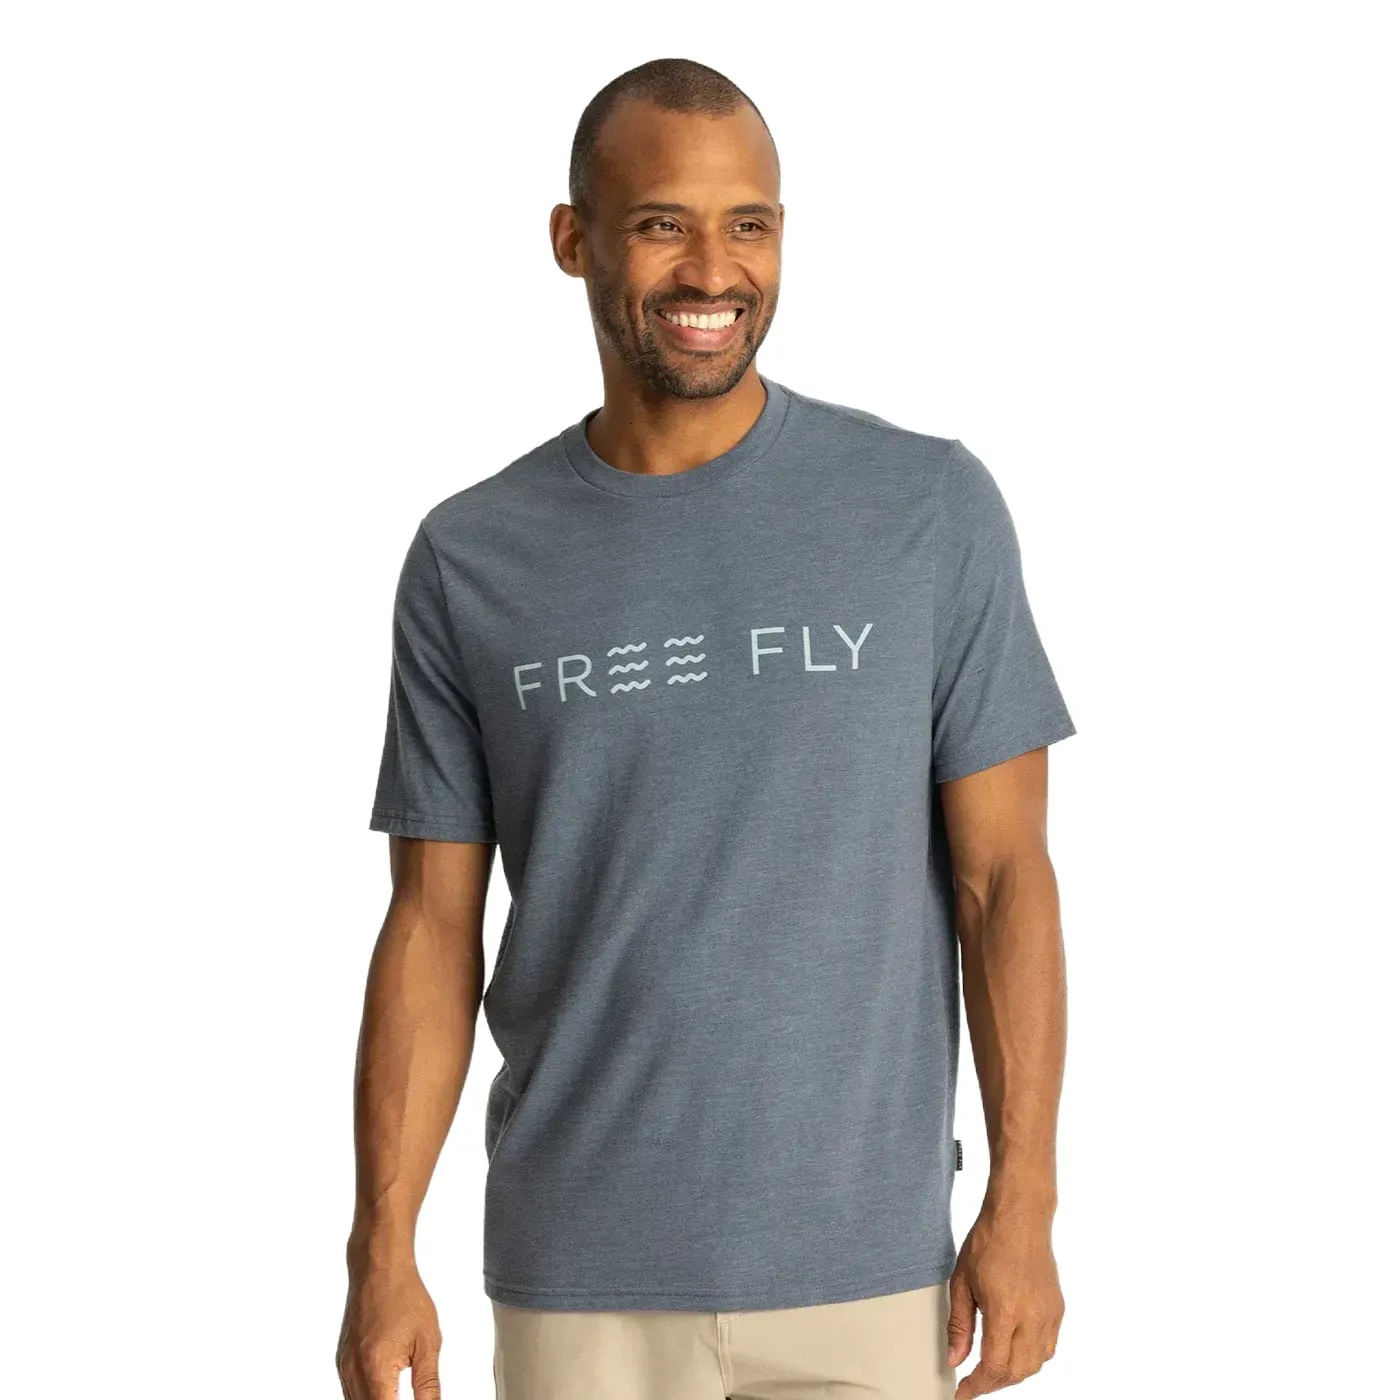 Huk Men's KC Flying Flag Short Sleeve Fishing Shirt